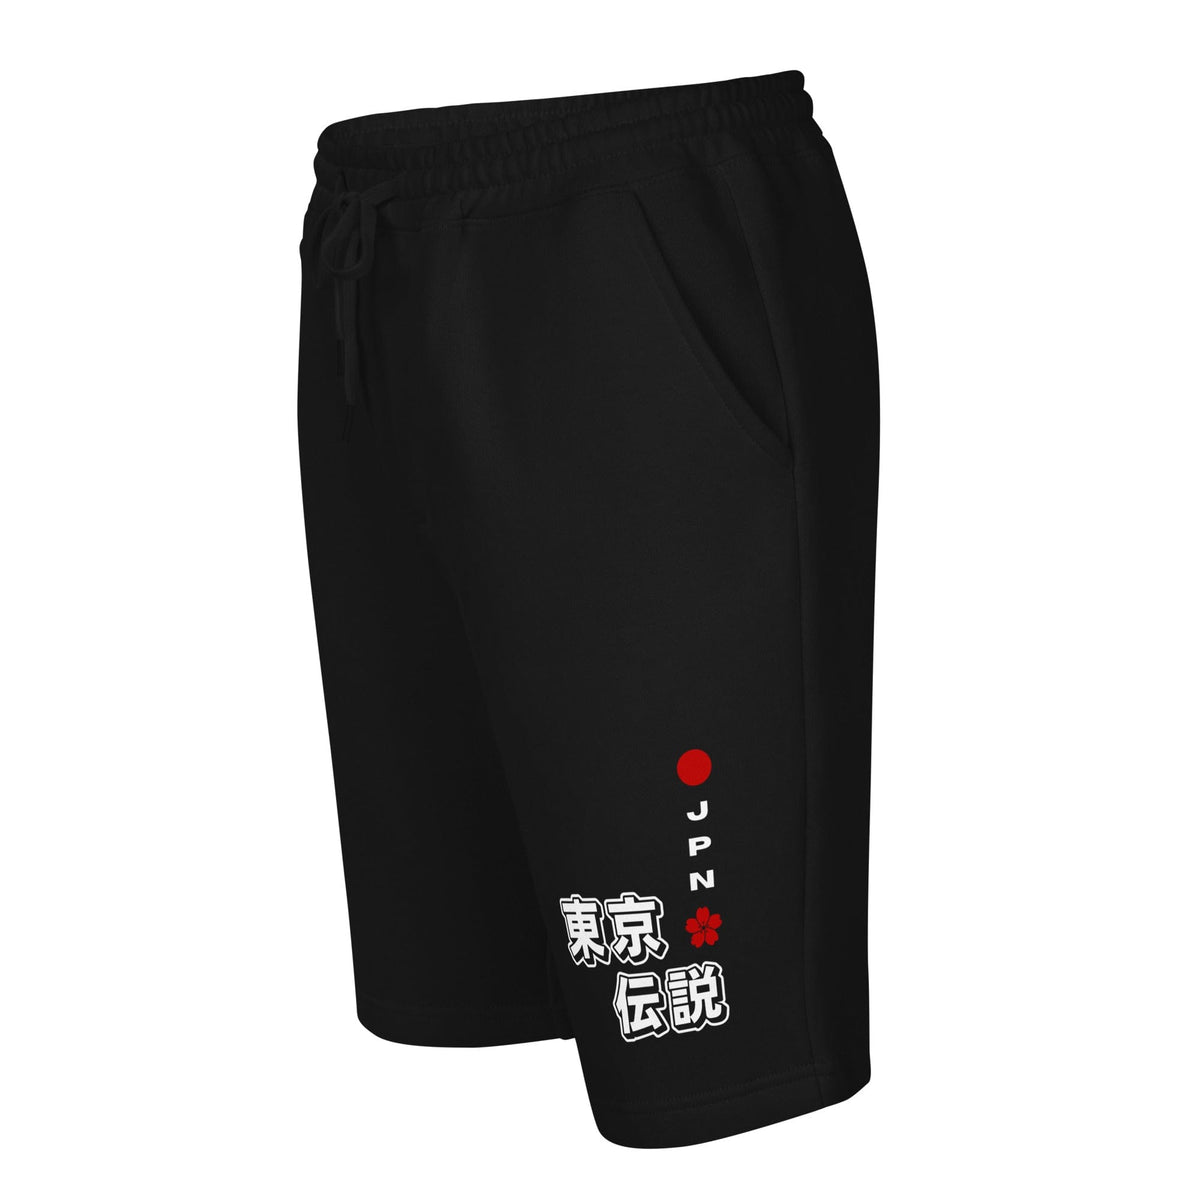 Tokyo Legend fleece shorts for the car enthusiast